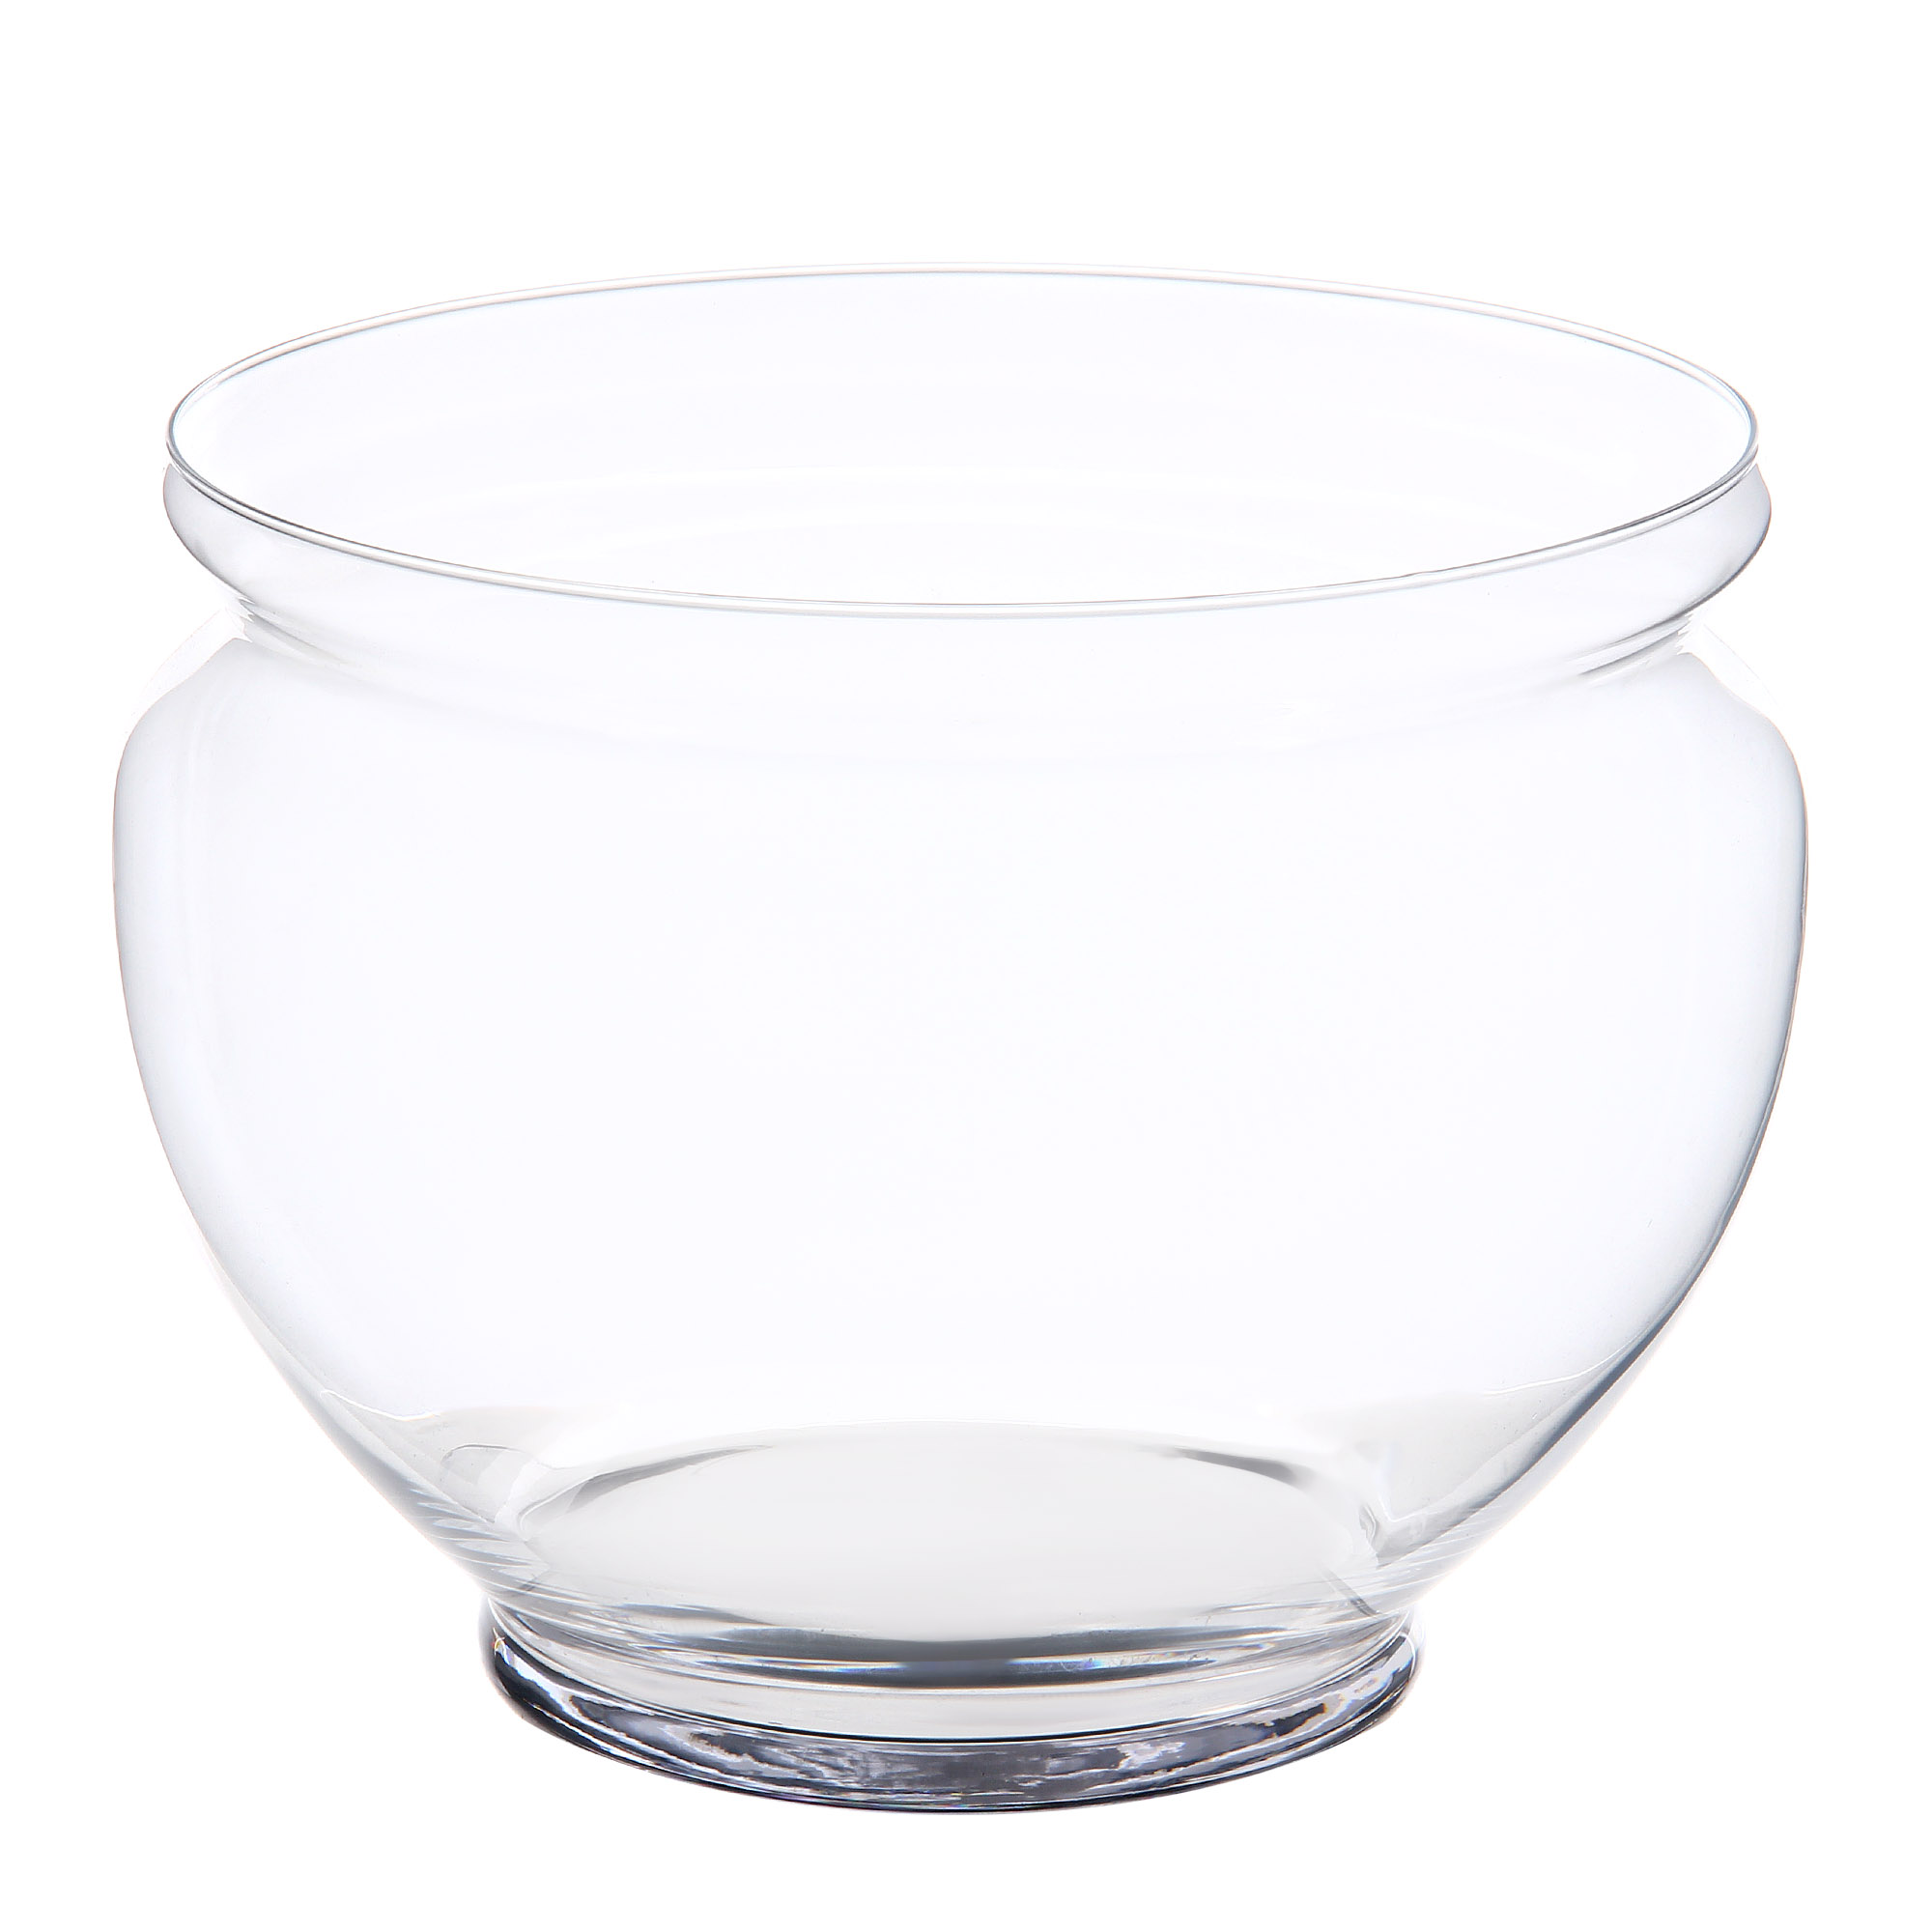 Ваза Hakbijl glass bella 25 см